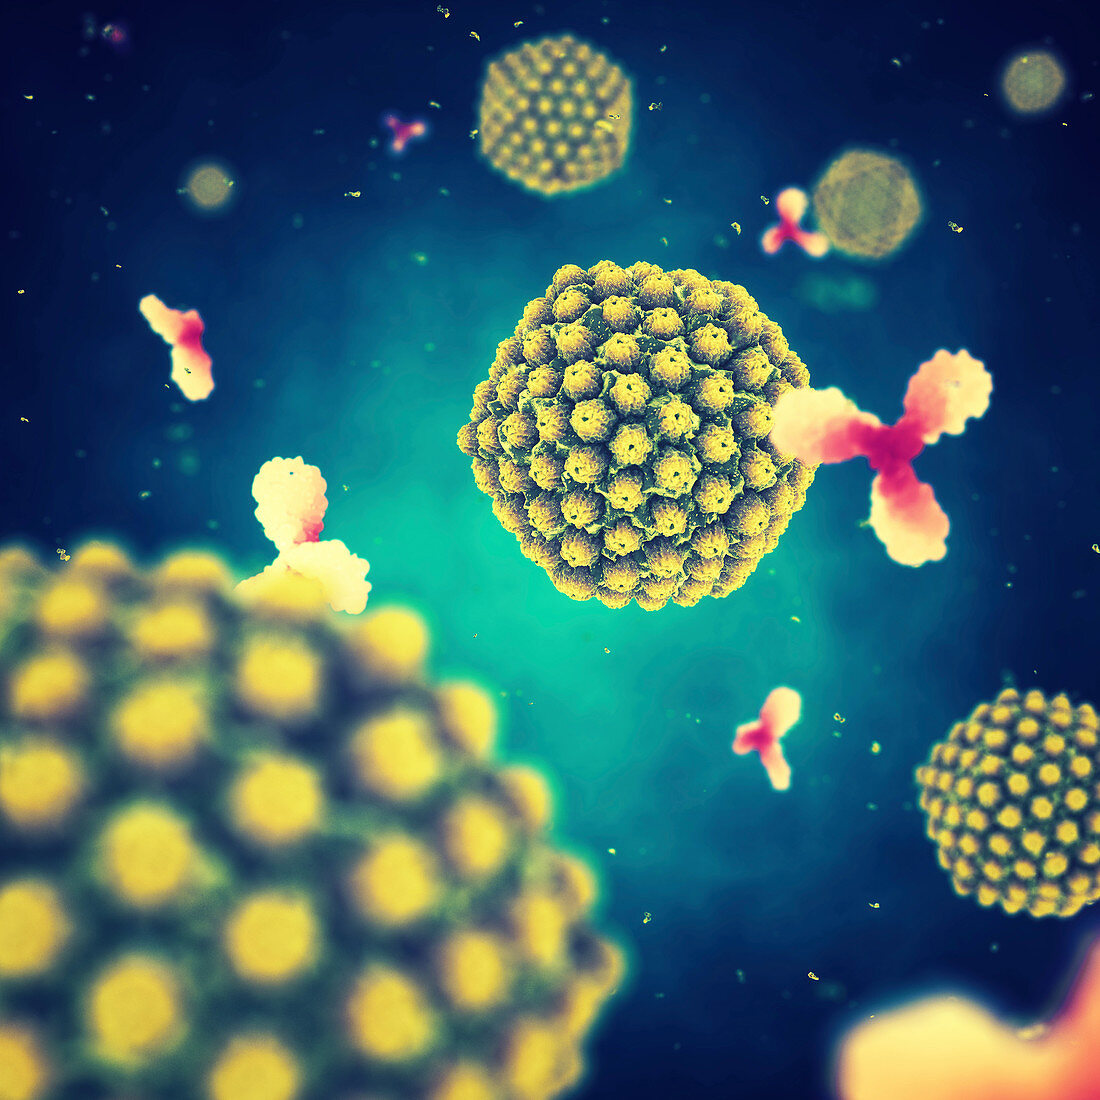 Herpes viruses and antibodies, illustration